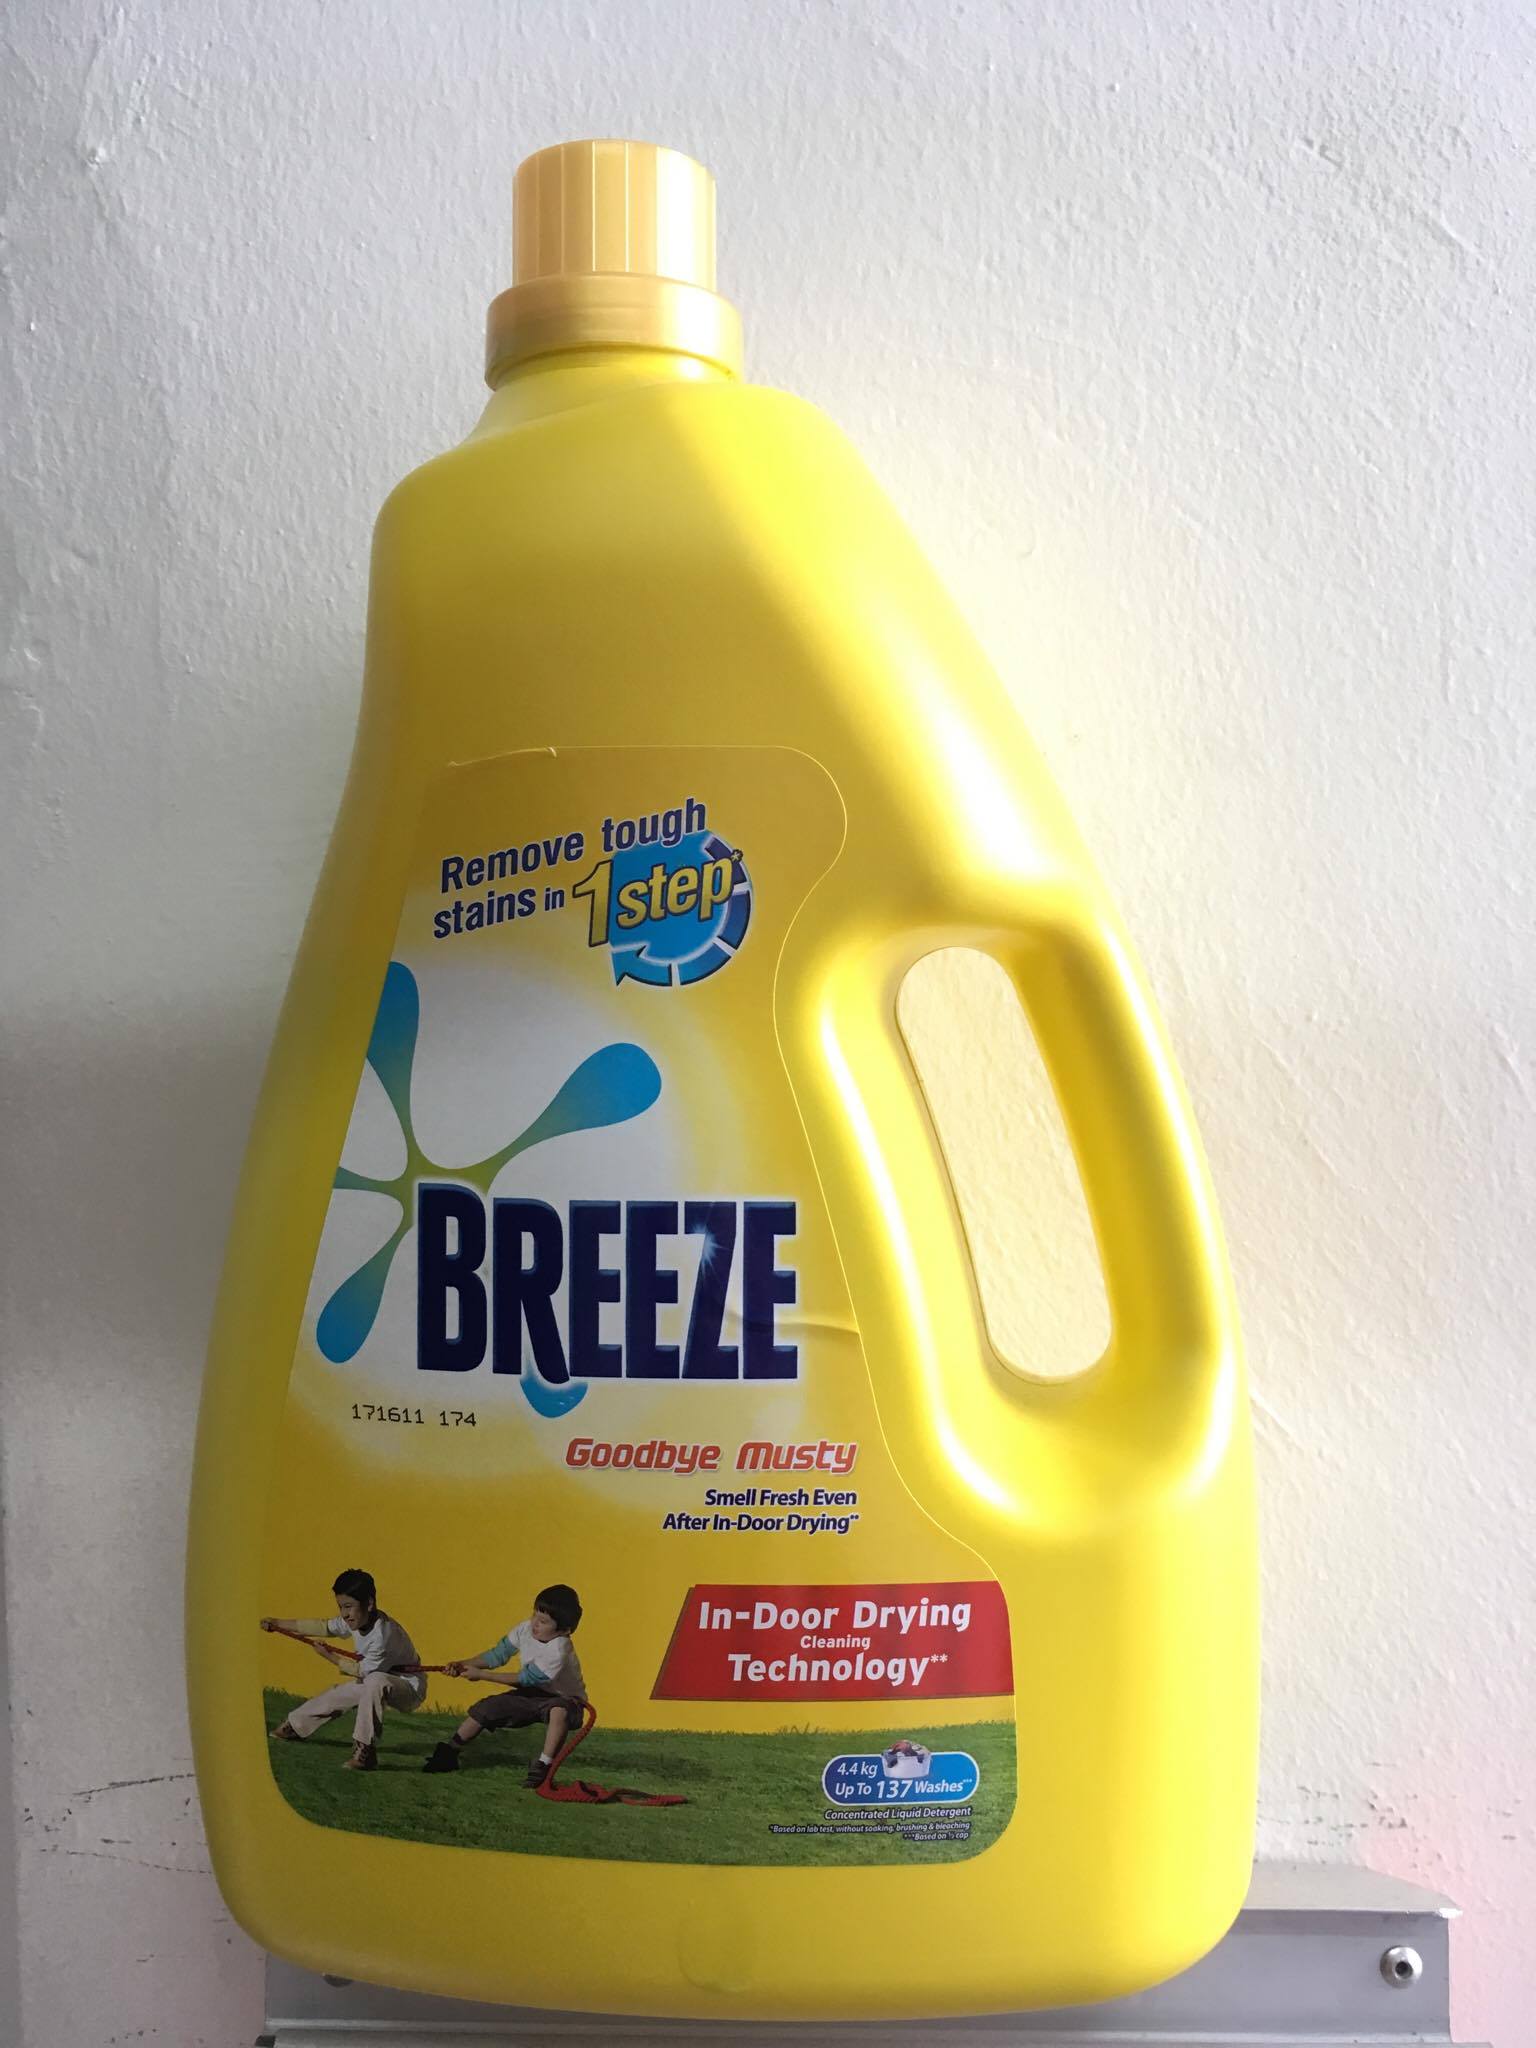 Breeze Liquid Goodbye Musty reviews